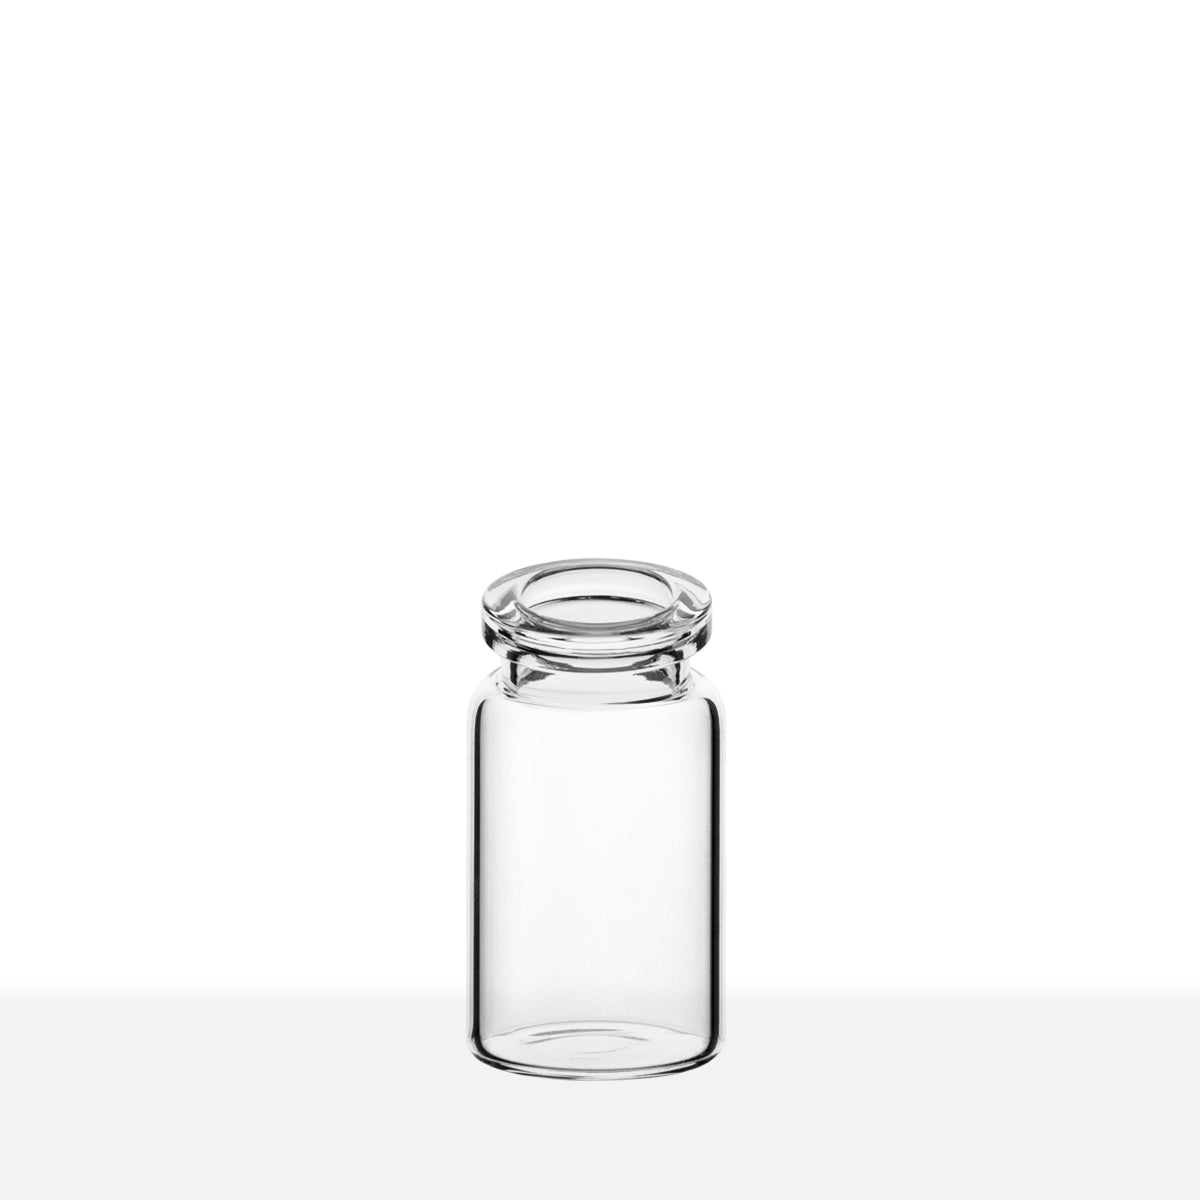 SERUM GLASS VIALS - CLEAR Item #:VCAS202240S